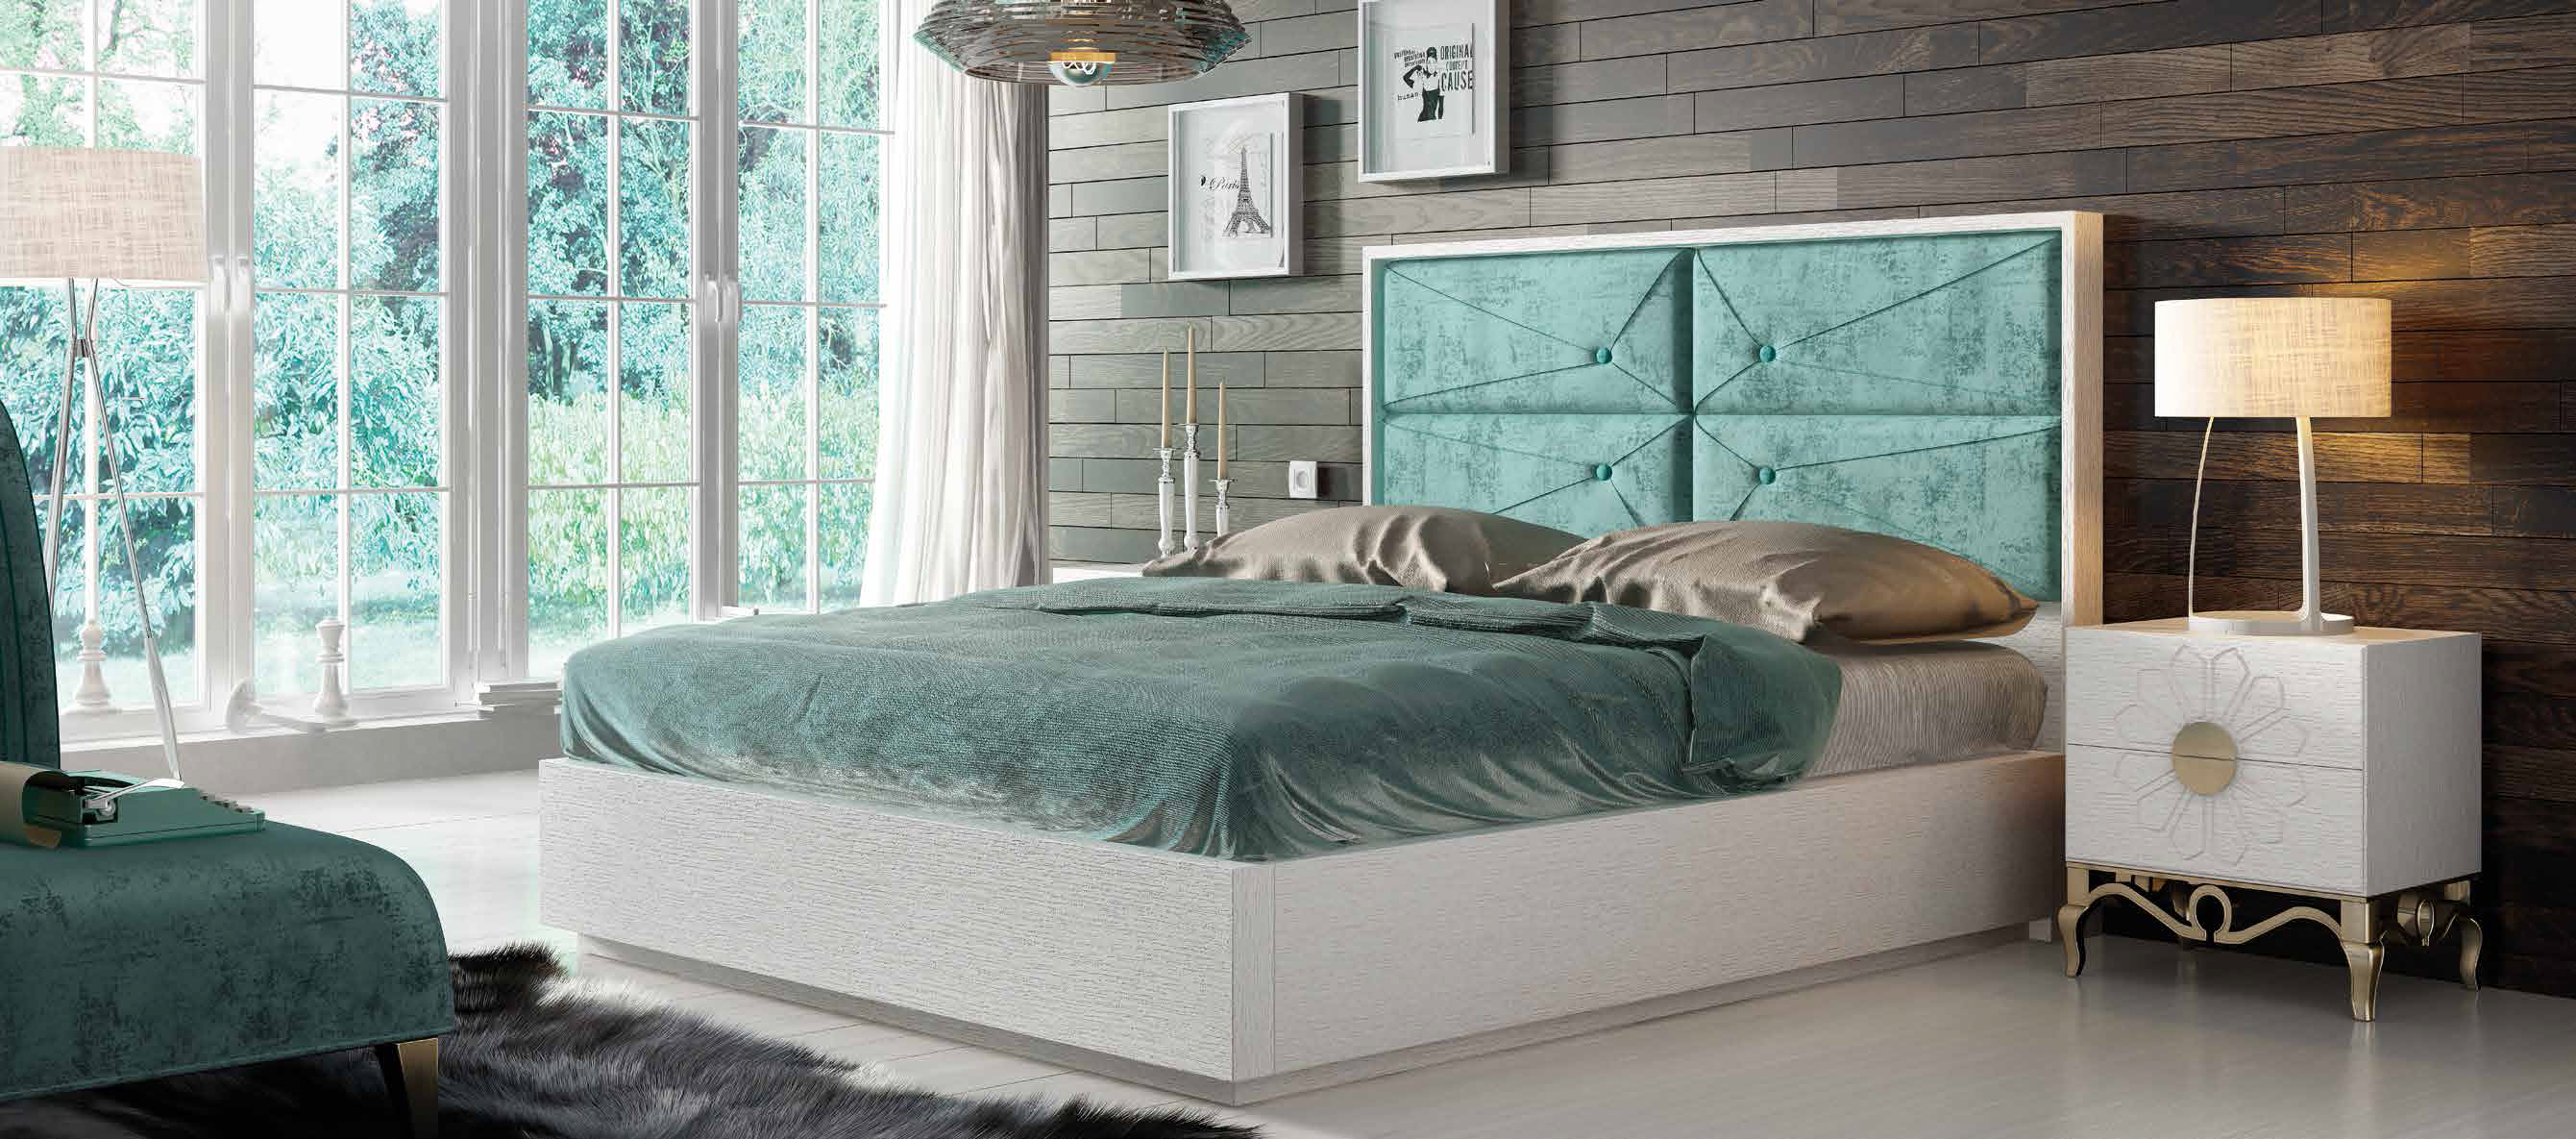 Brands Franco Furniture Bedrooms vol3, Spain DOR 63